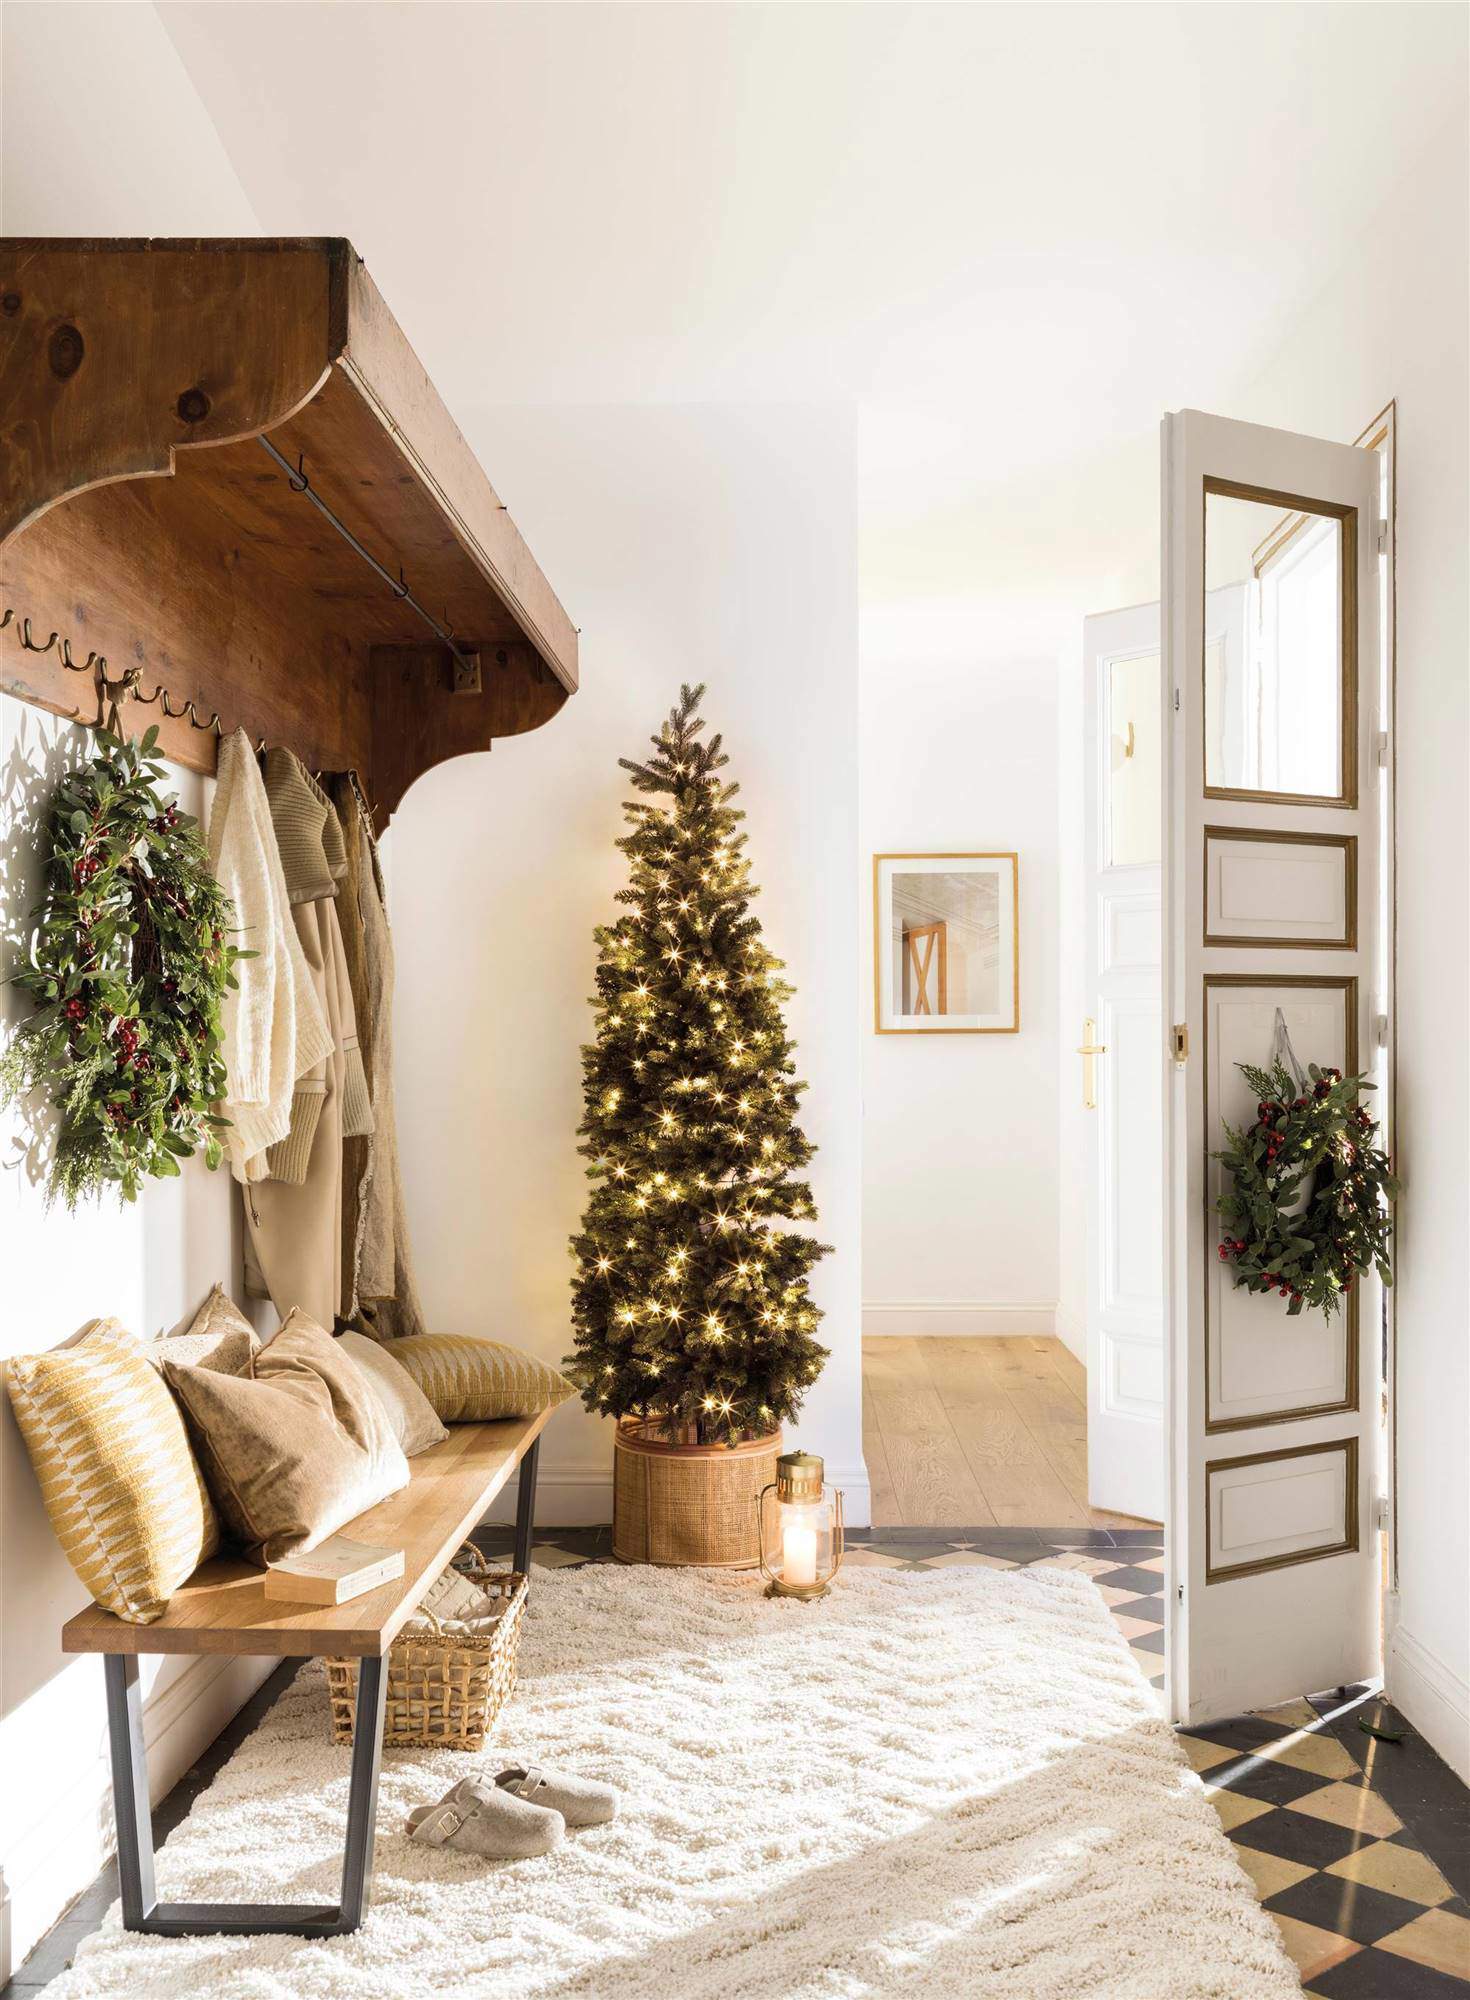 Recibidor decorado con árbol de Navidad con luces doradas.